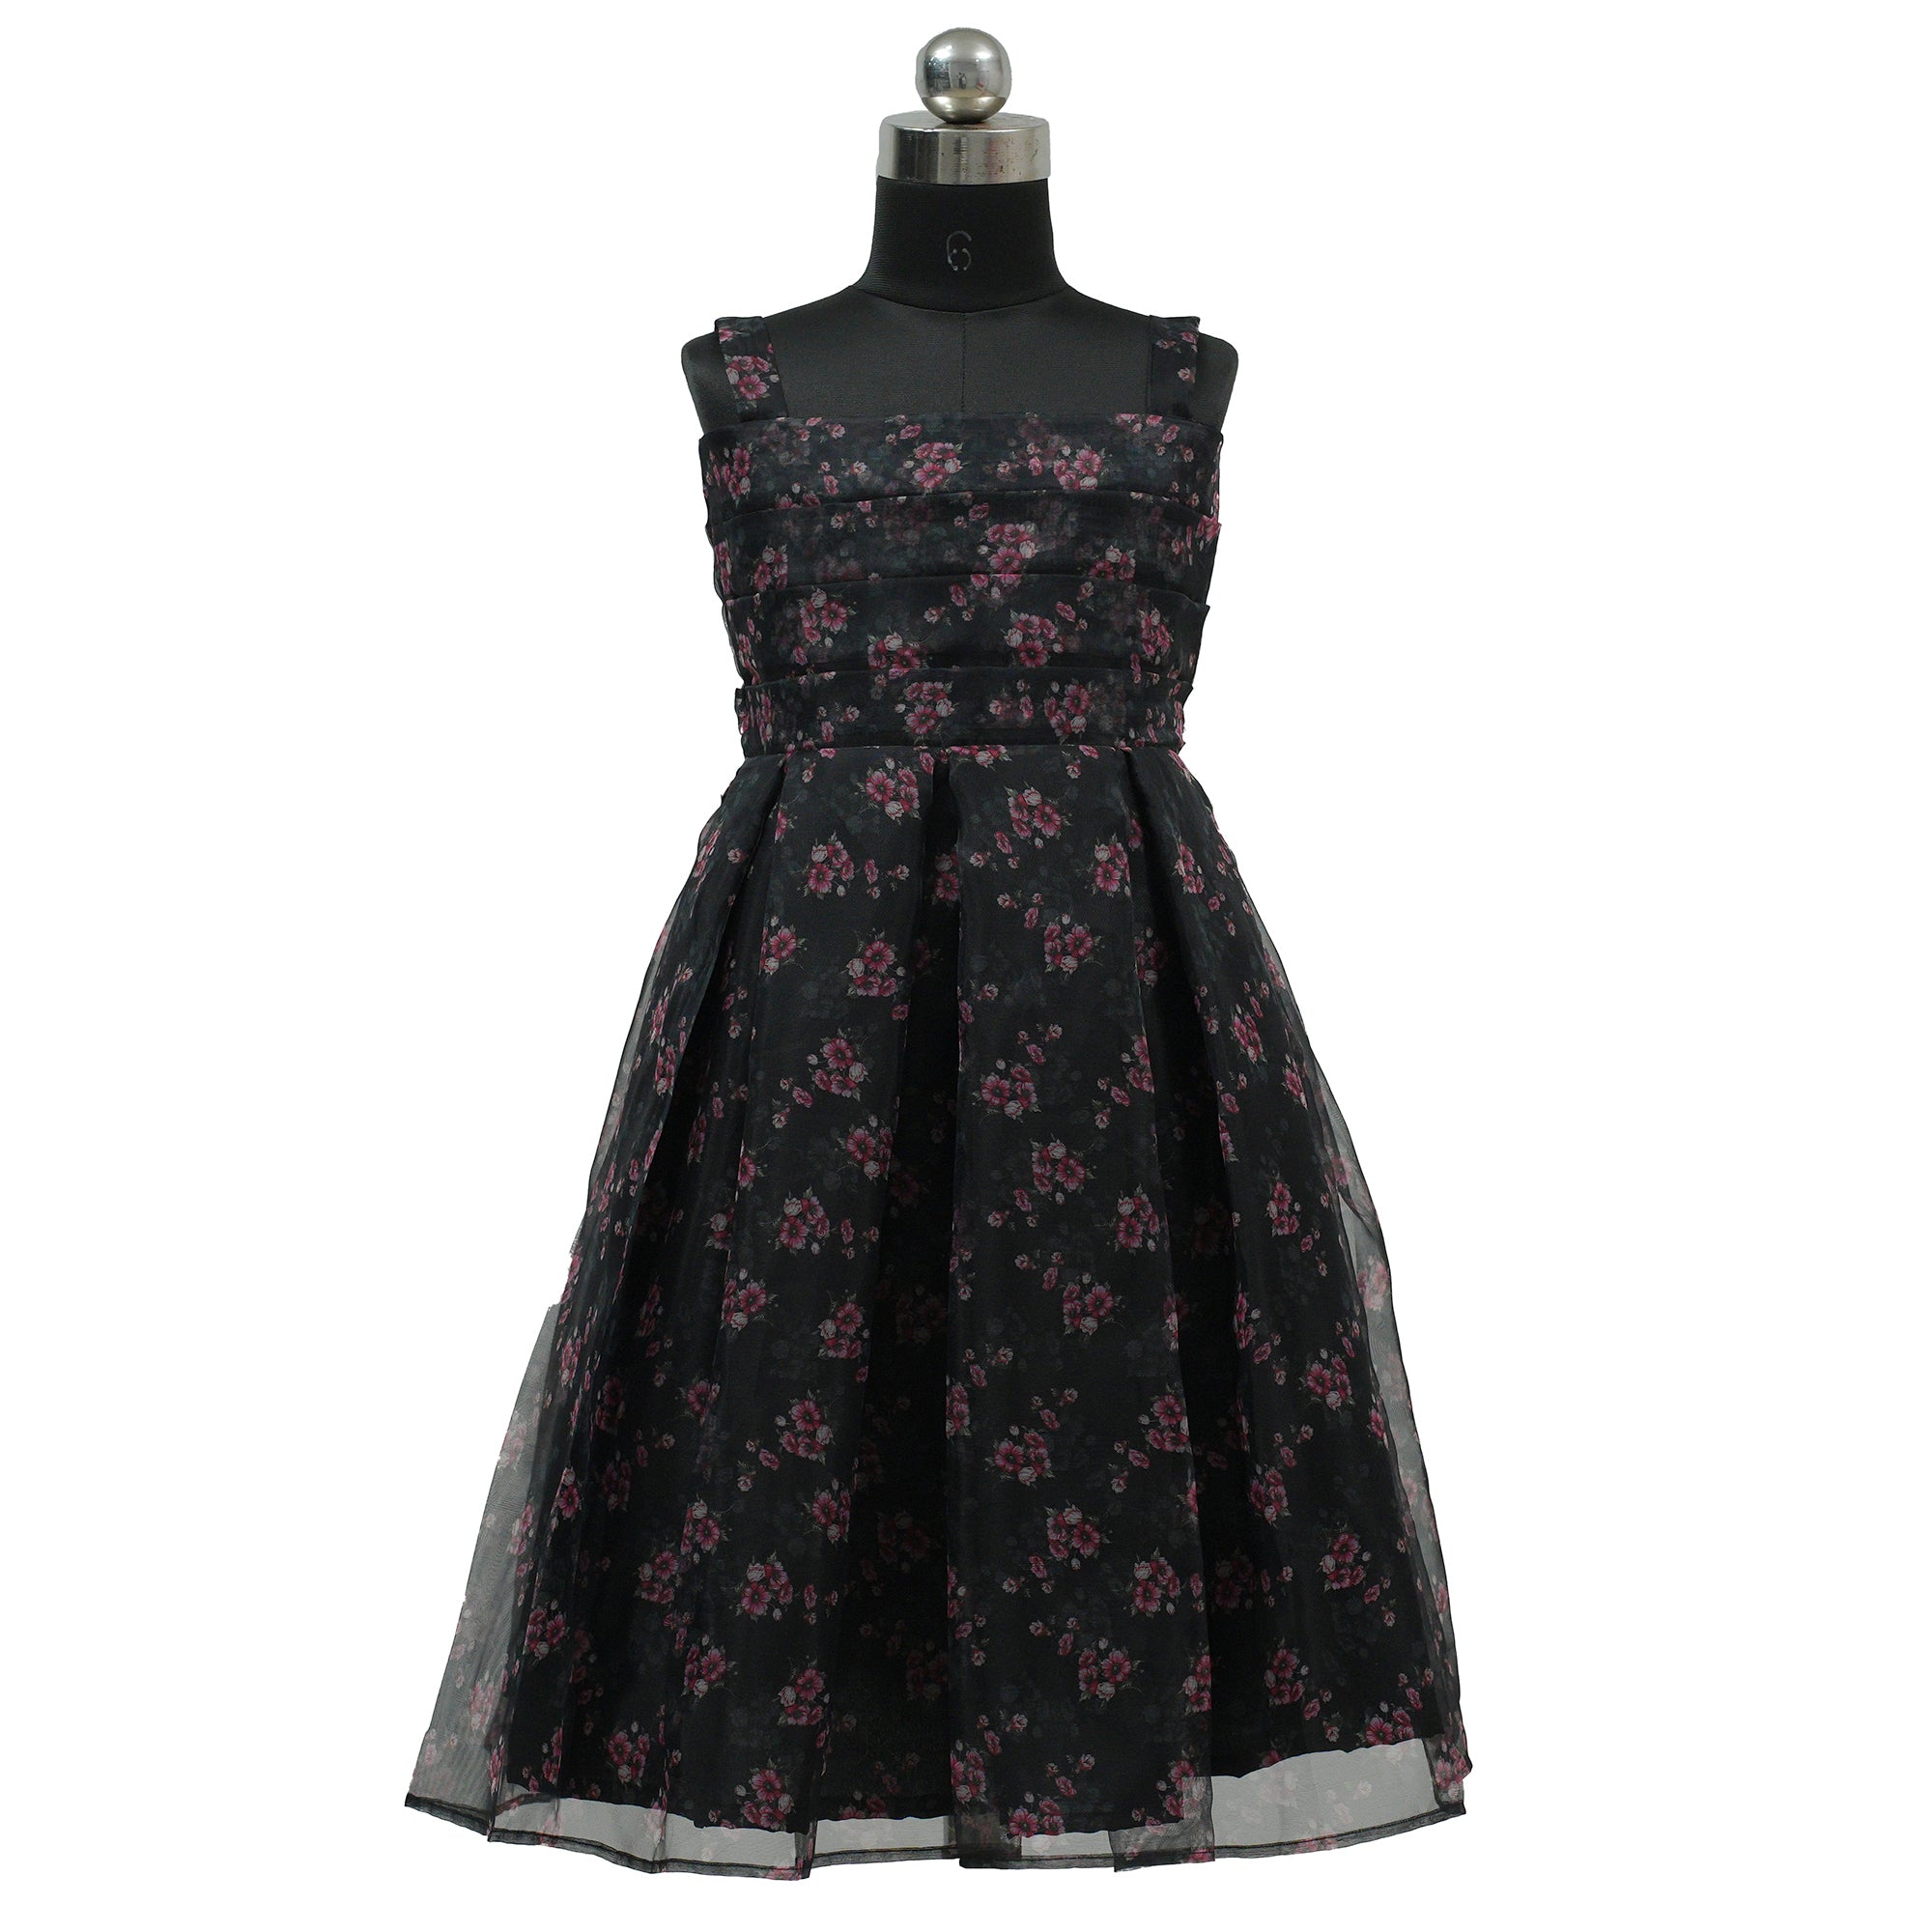 New Party Wear Net Gown Designs -Storyvogue.com | Fancy dresses long, Long  gown design, Stylish party dresses